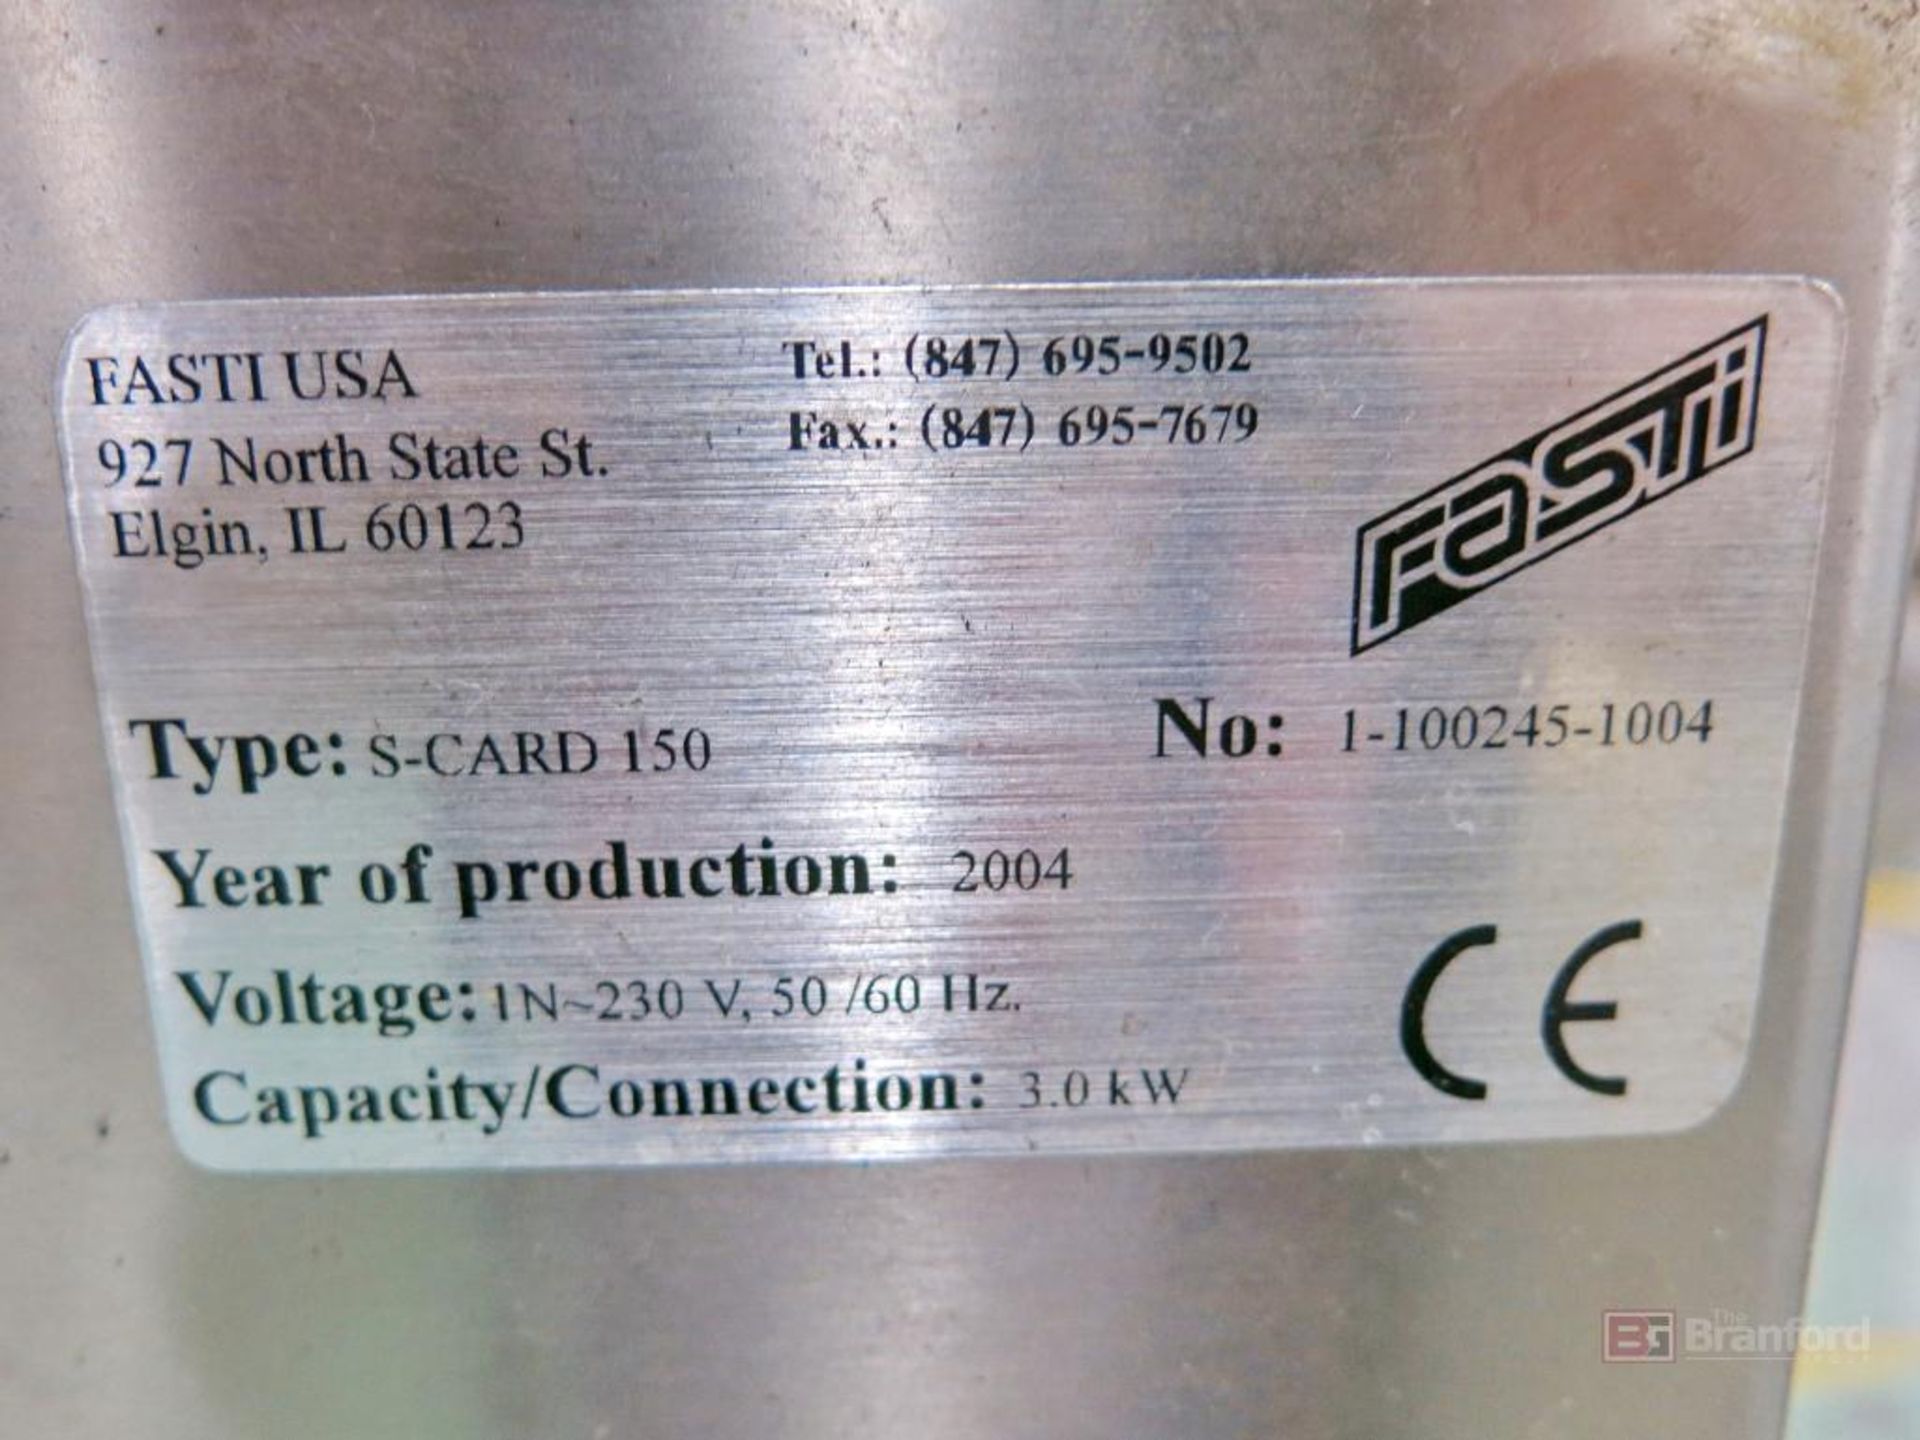 Fasti Model S-Card 150 Resin Material Dryer - Image 3 of 3